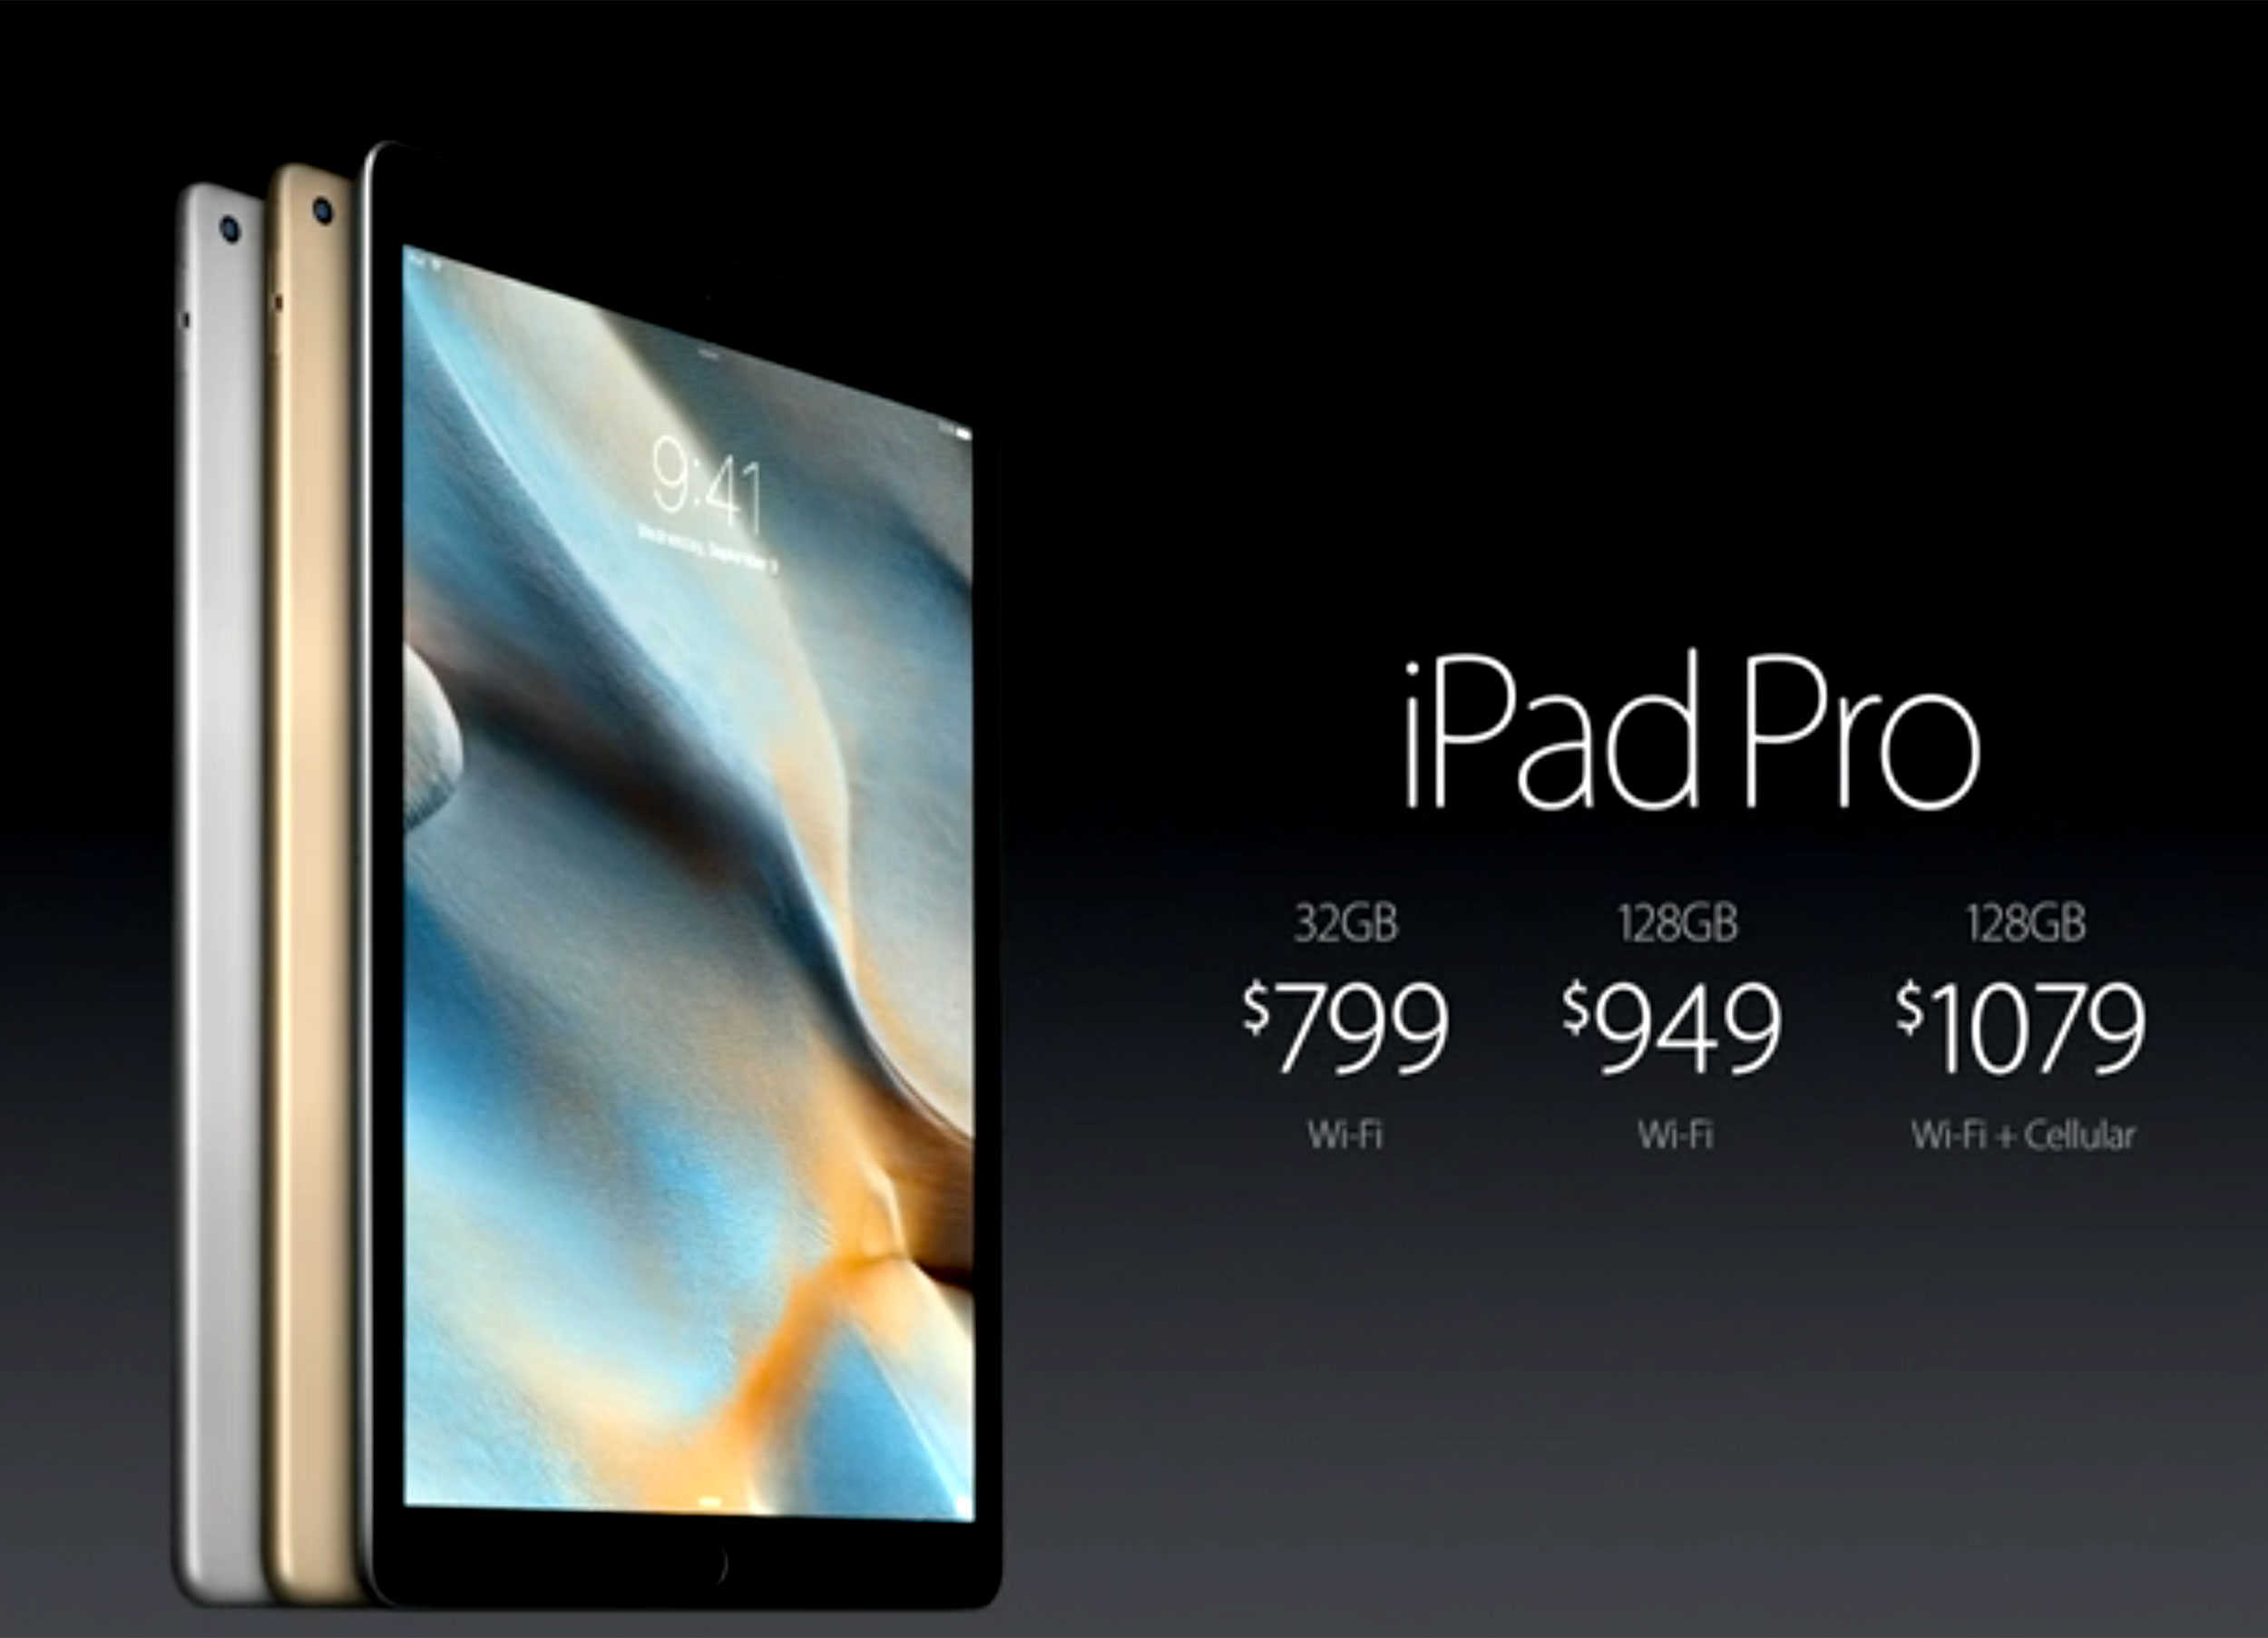 The iPad Pro goes on sale November 11th.